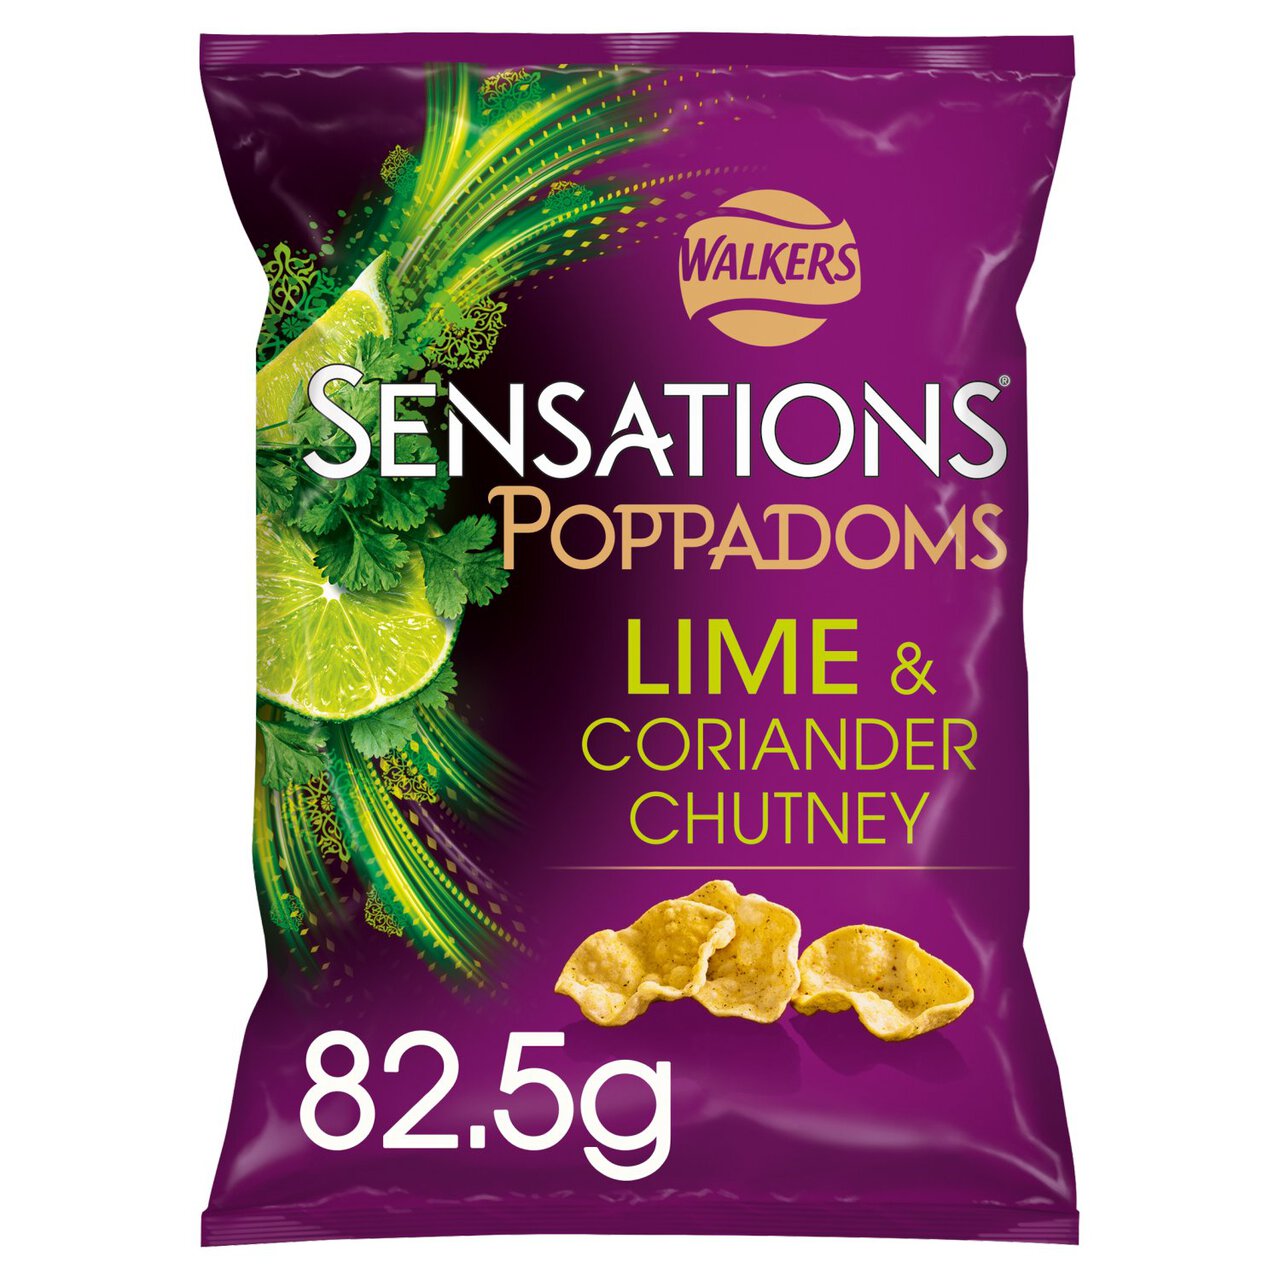 Sensations Lime & Coriander Chutney Sharing Bag Poppadoms 82.5g